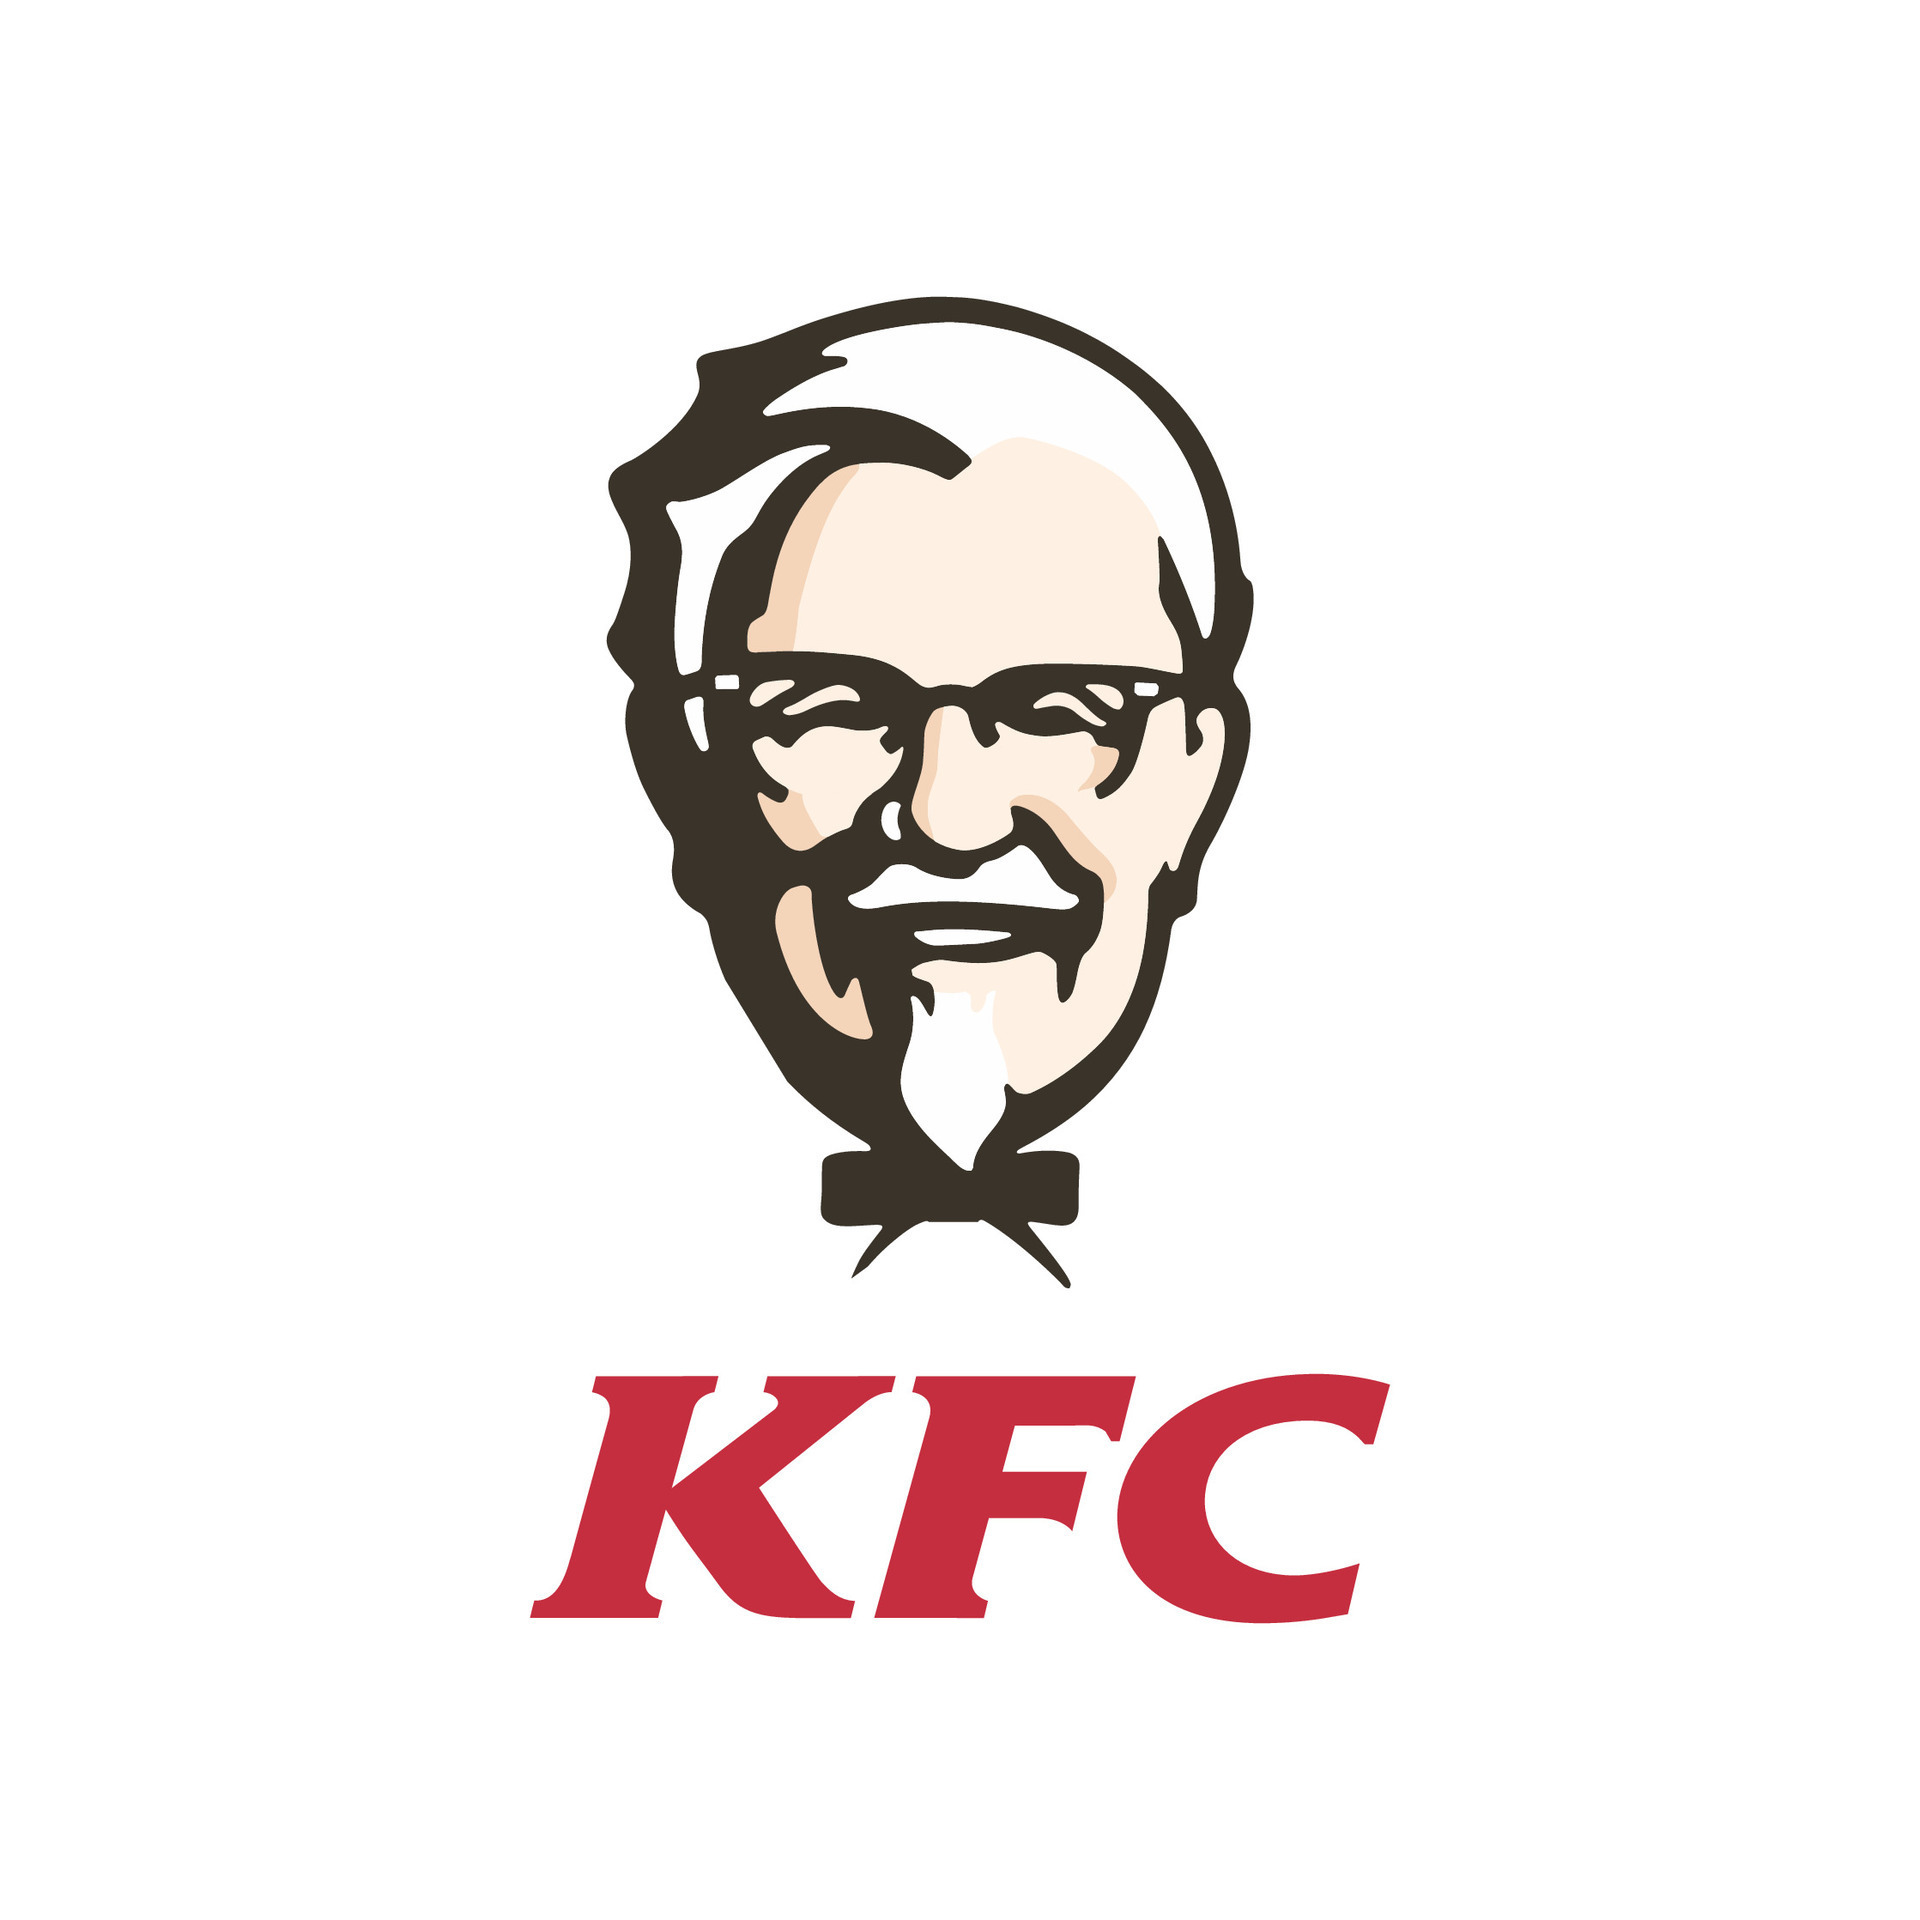 KFC logo editorial vector 26783628 Vector Art at Vecteezy